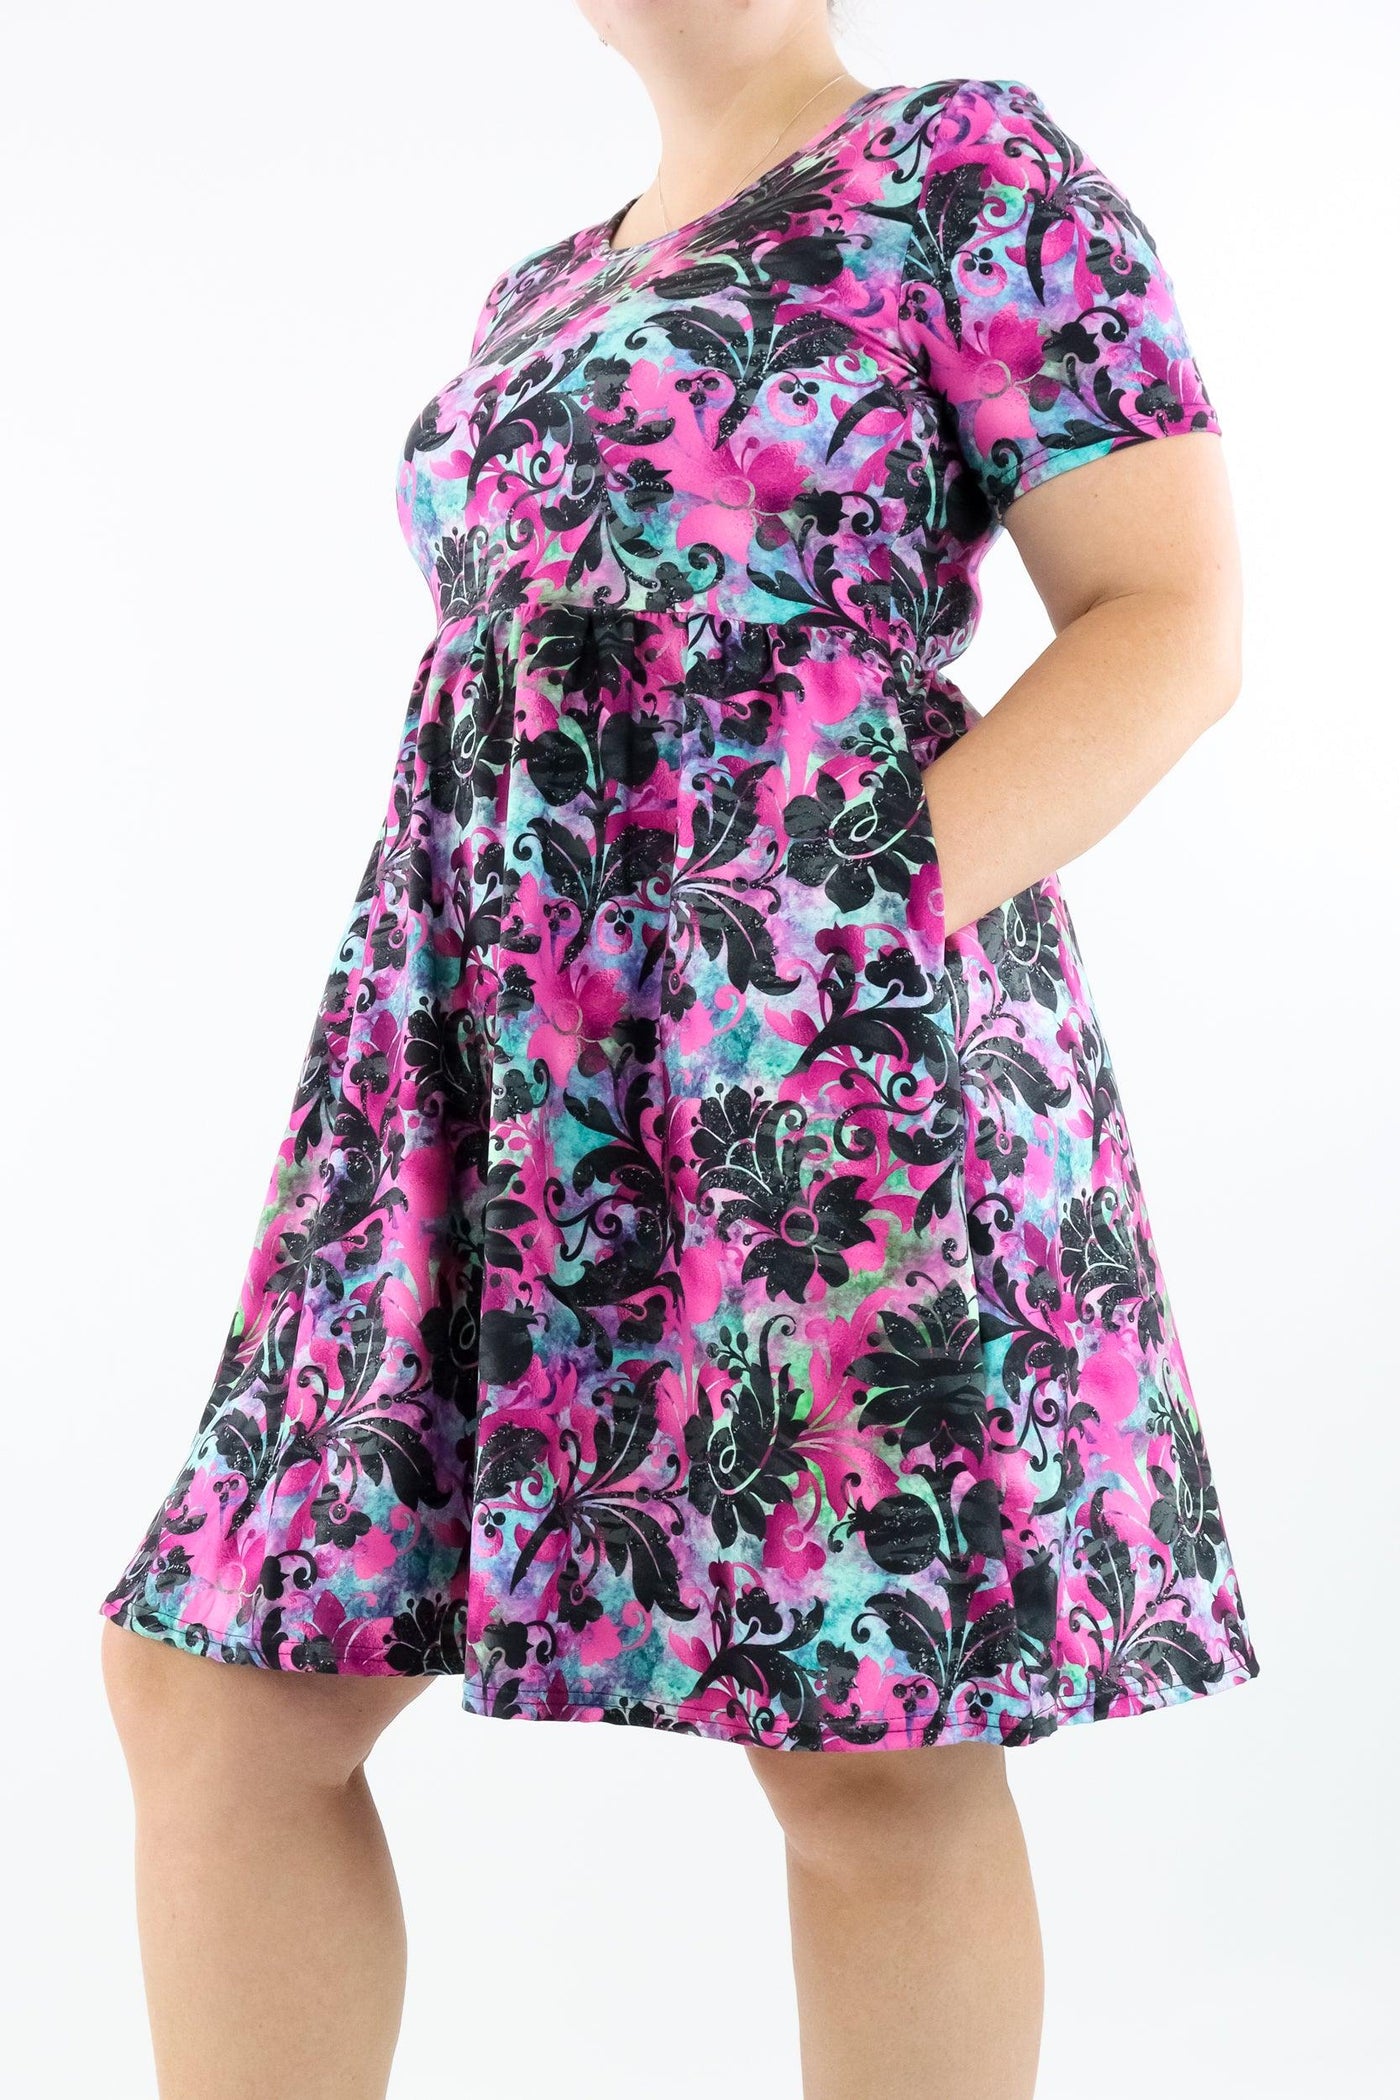 Glisten Floral - Short Sleeve Skater Dress - Knee Length - Side Pockets